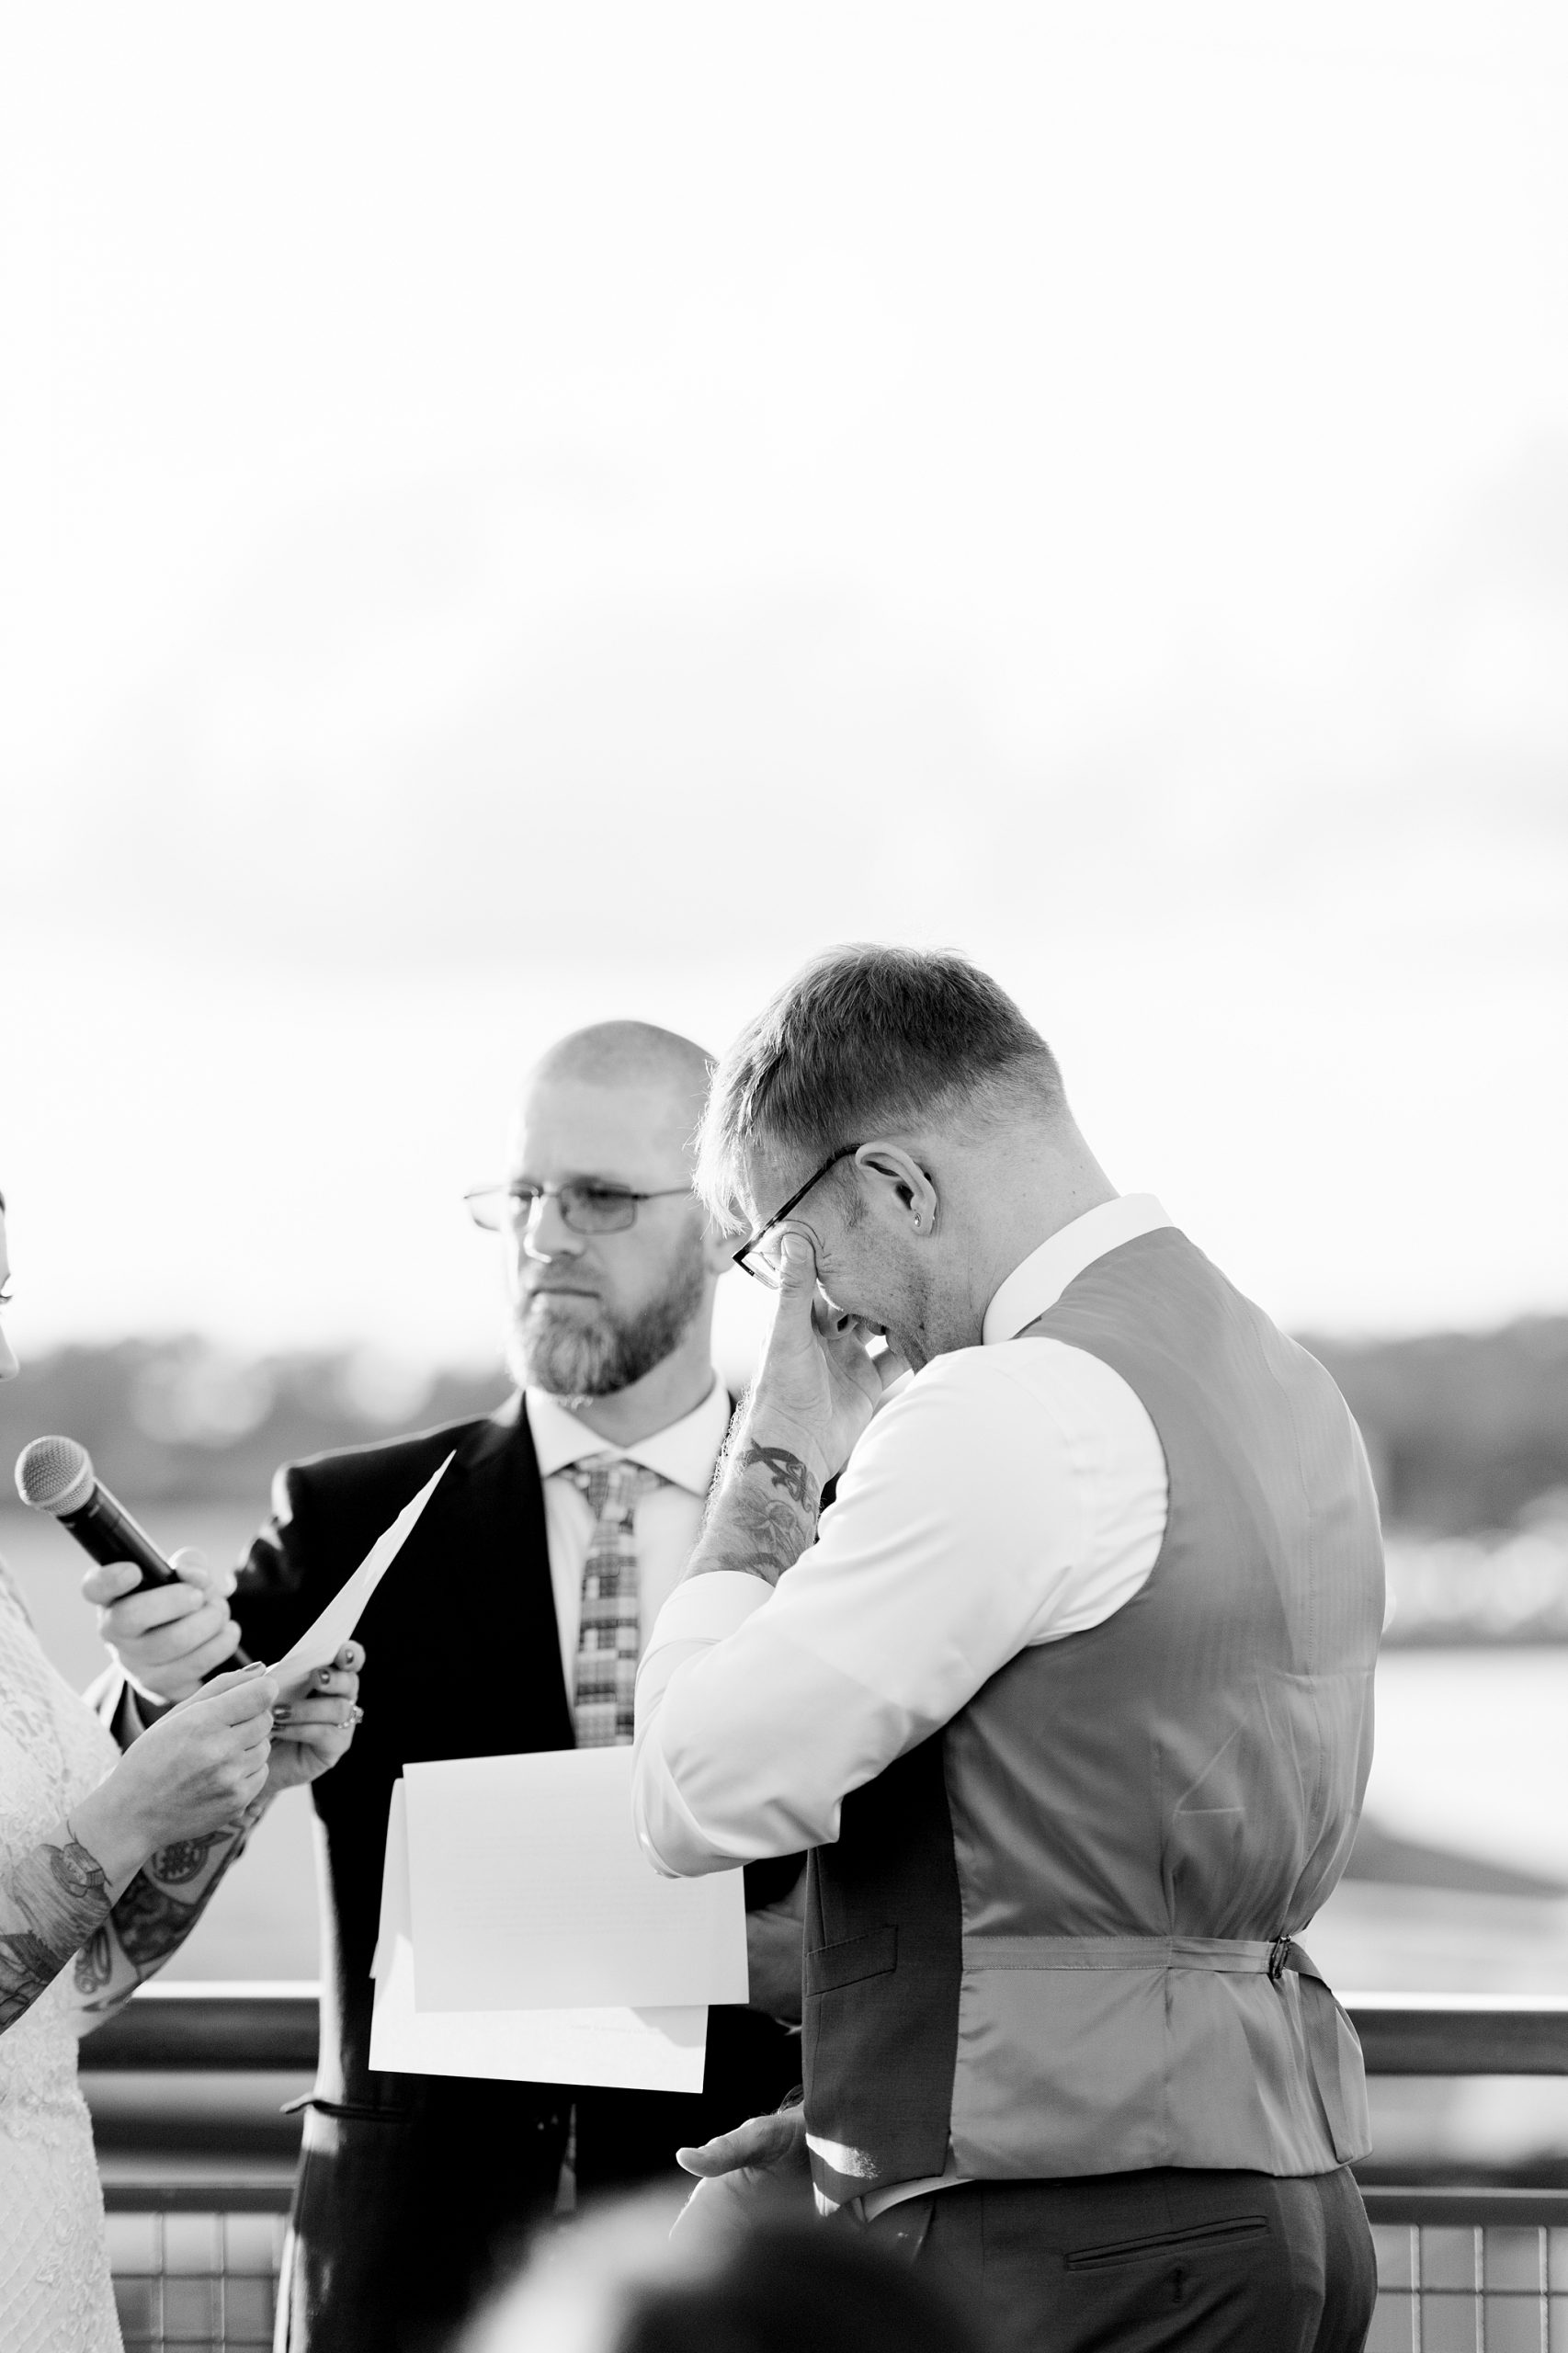 Emotional Groom on Wedding Day | Orlando Wedding Photographer